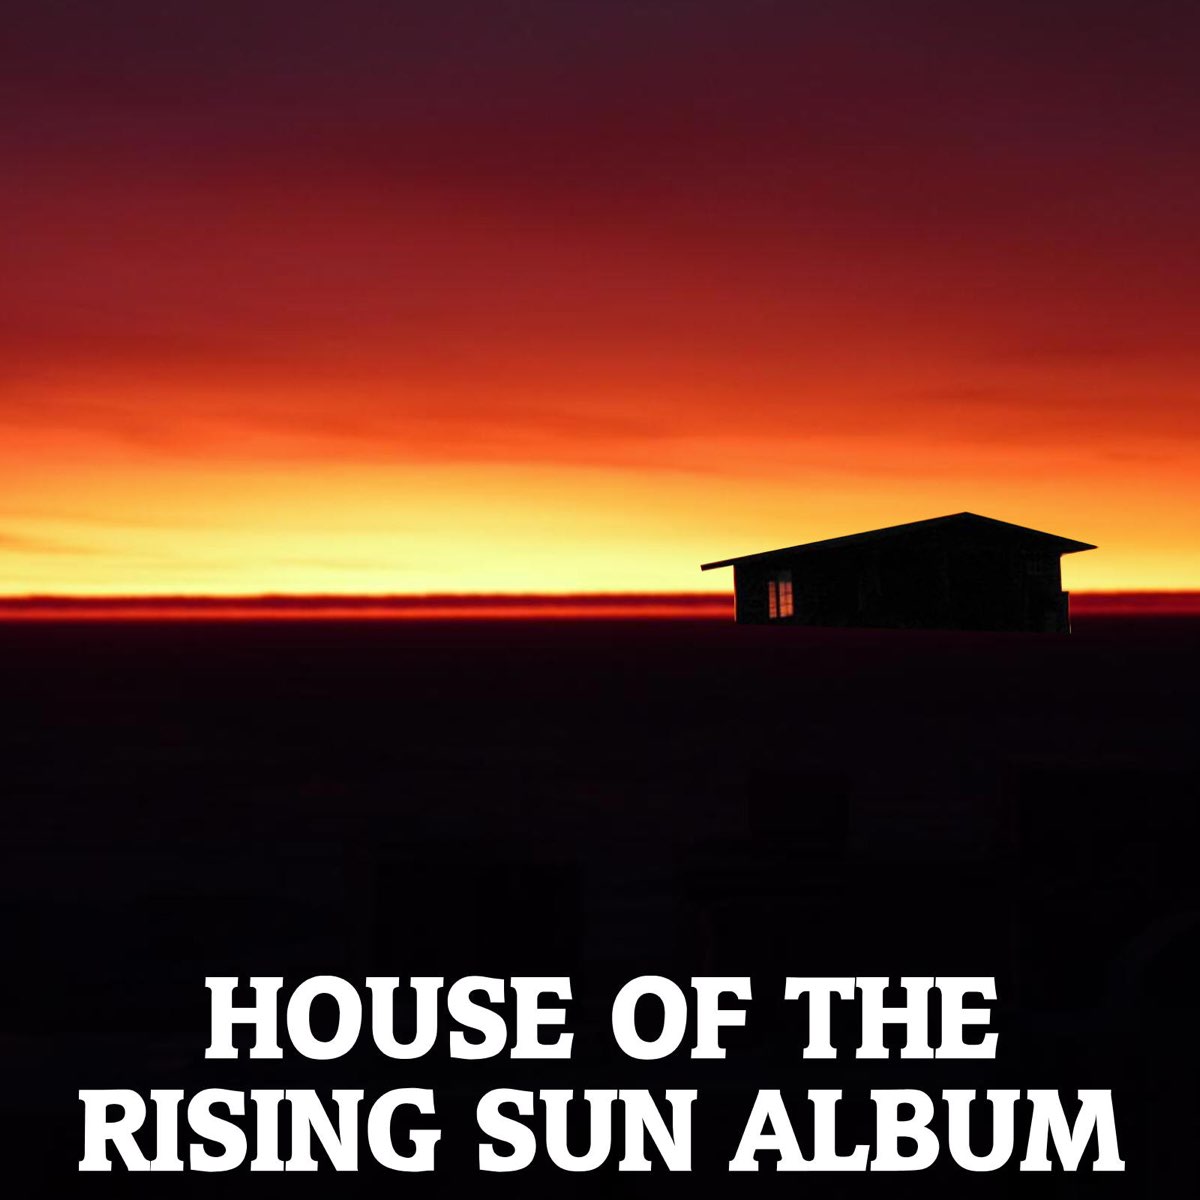 House of the Rising Sun. House of Rising Sun альбом. Дом восходящего солнца новый Орлеан. House of the Rising Sun обложка. Песня me house